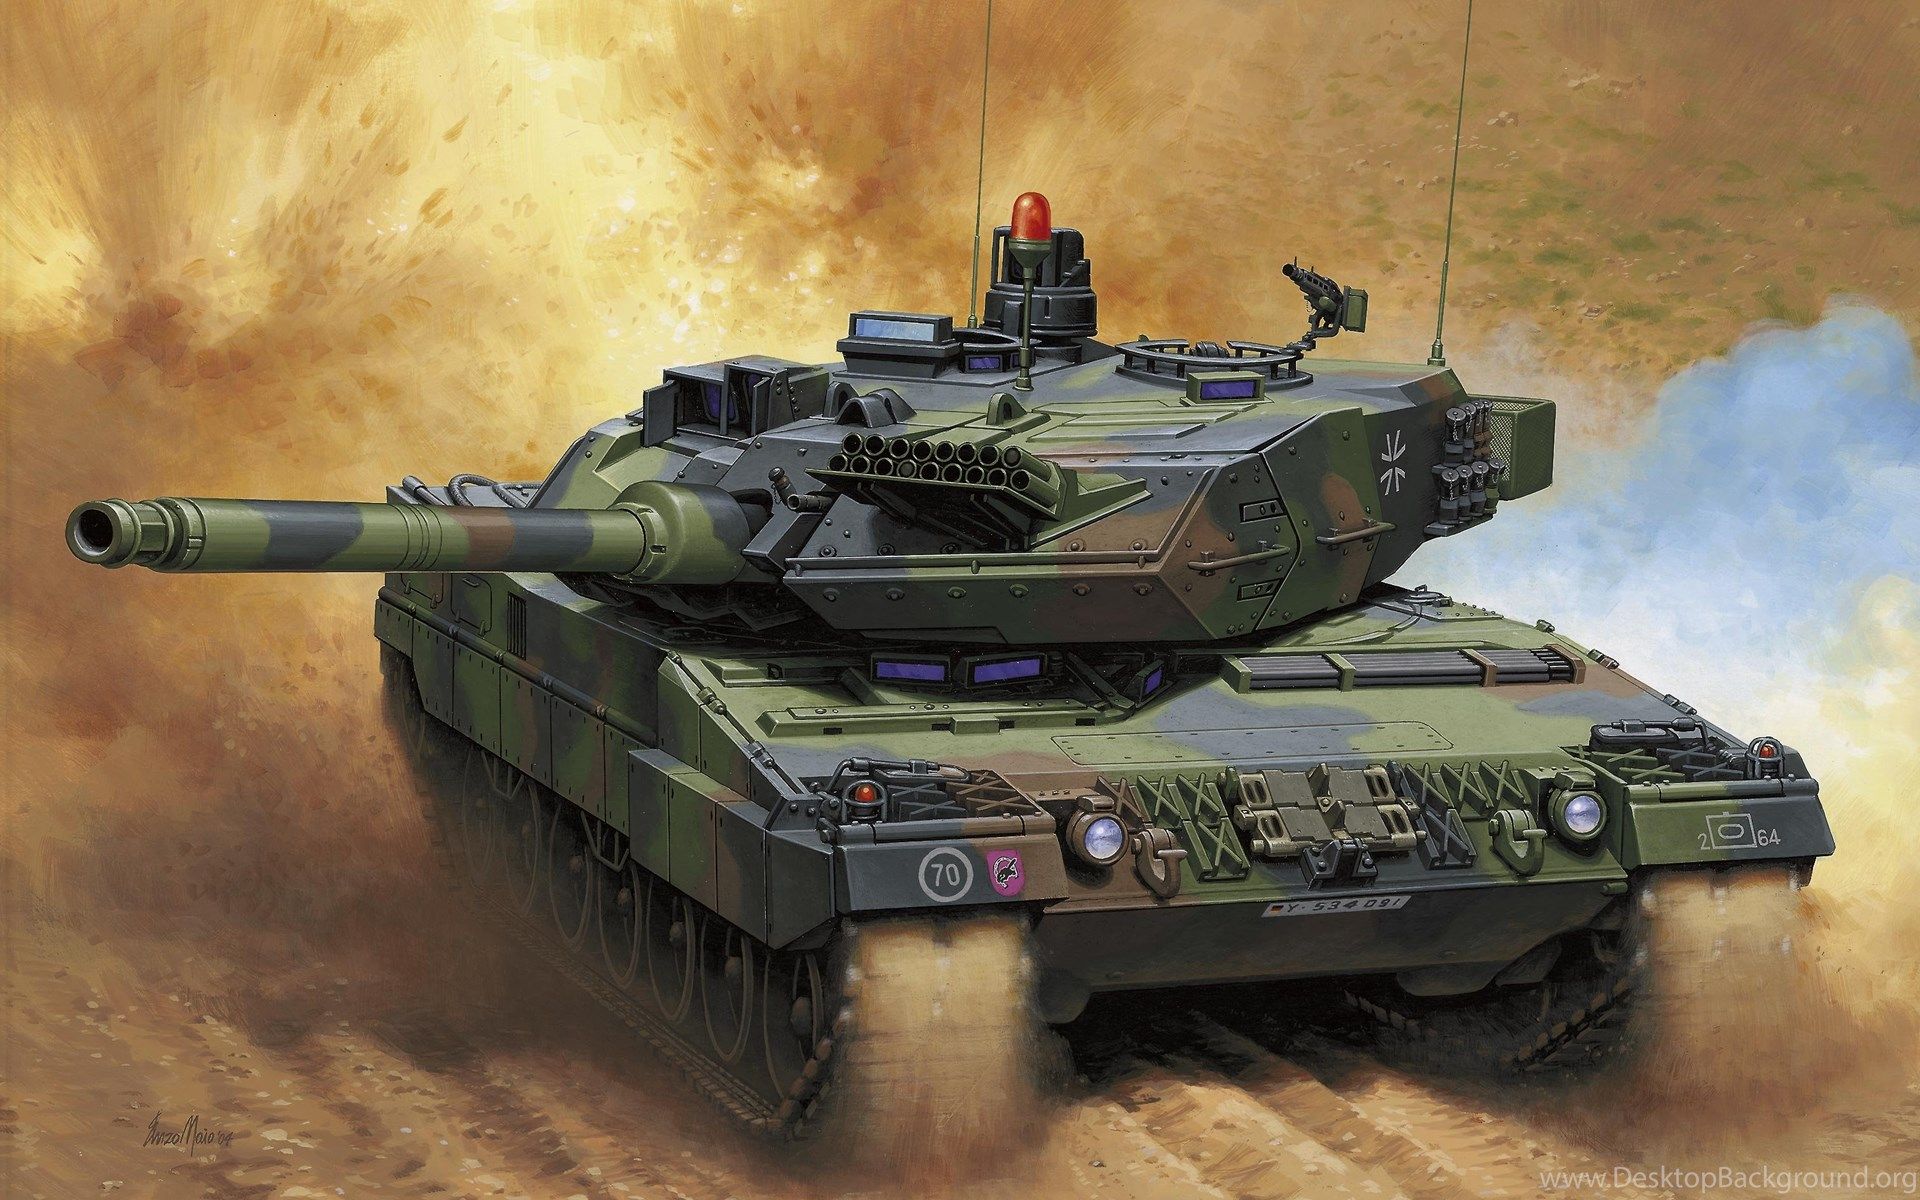 Wallpaper Painting Art Tanks Tank Leopard 2A Army Image Desktop Background